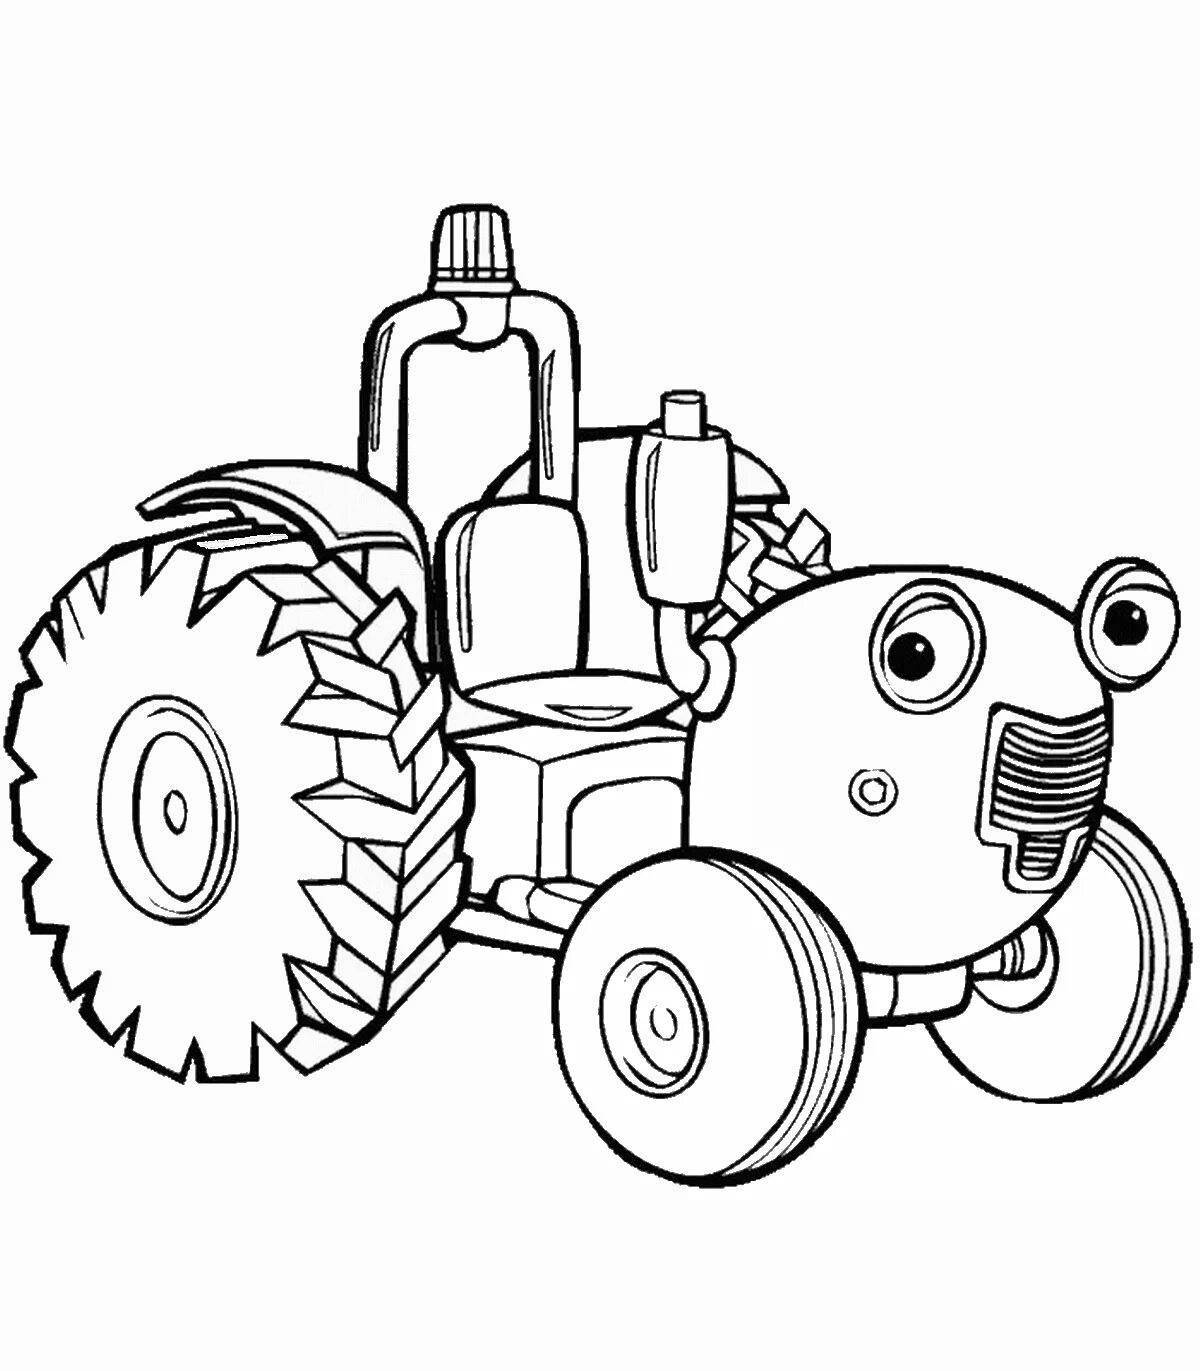 Cute farm equipment coloring book for kids